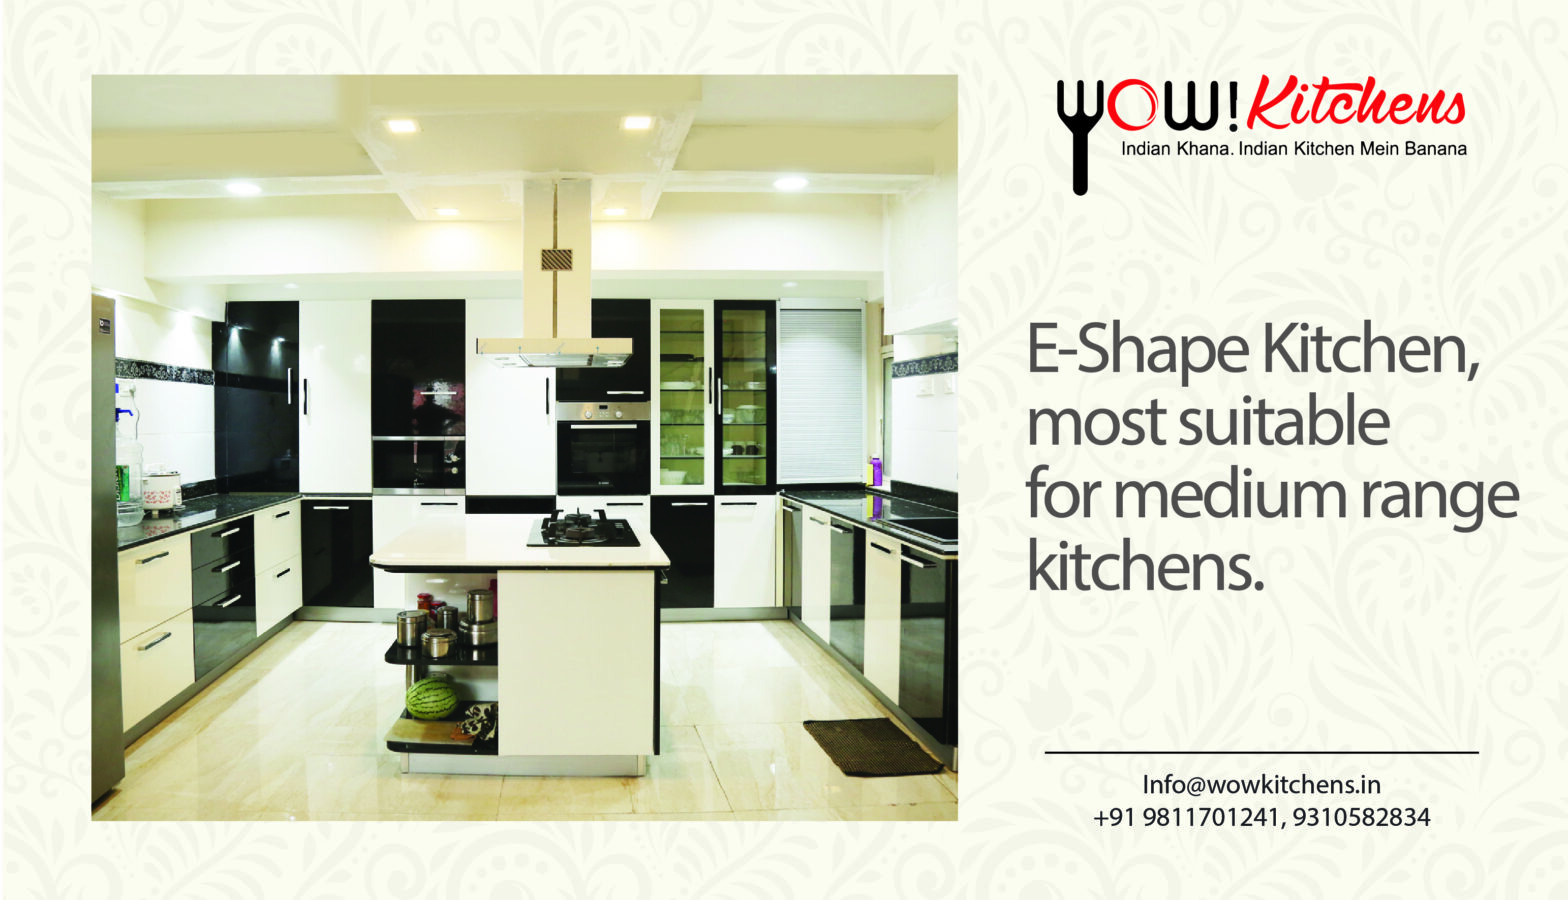 E-Shape Kitchen, Most Suitable for Medium Range Kitchens